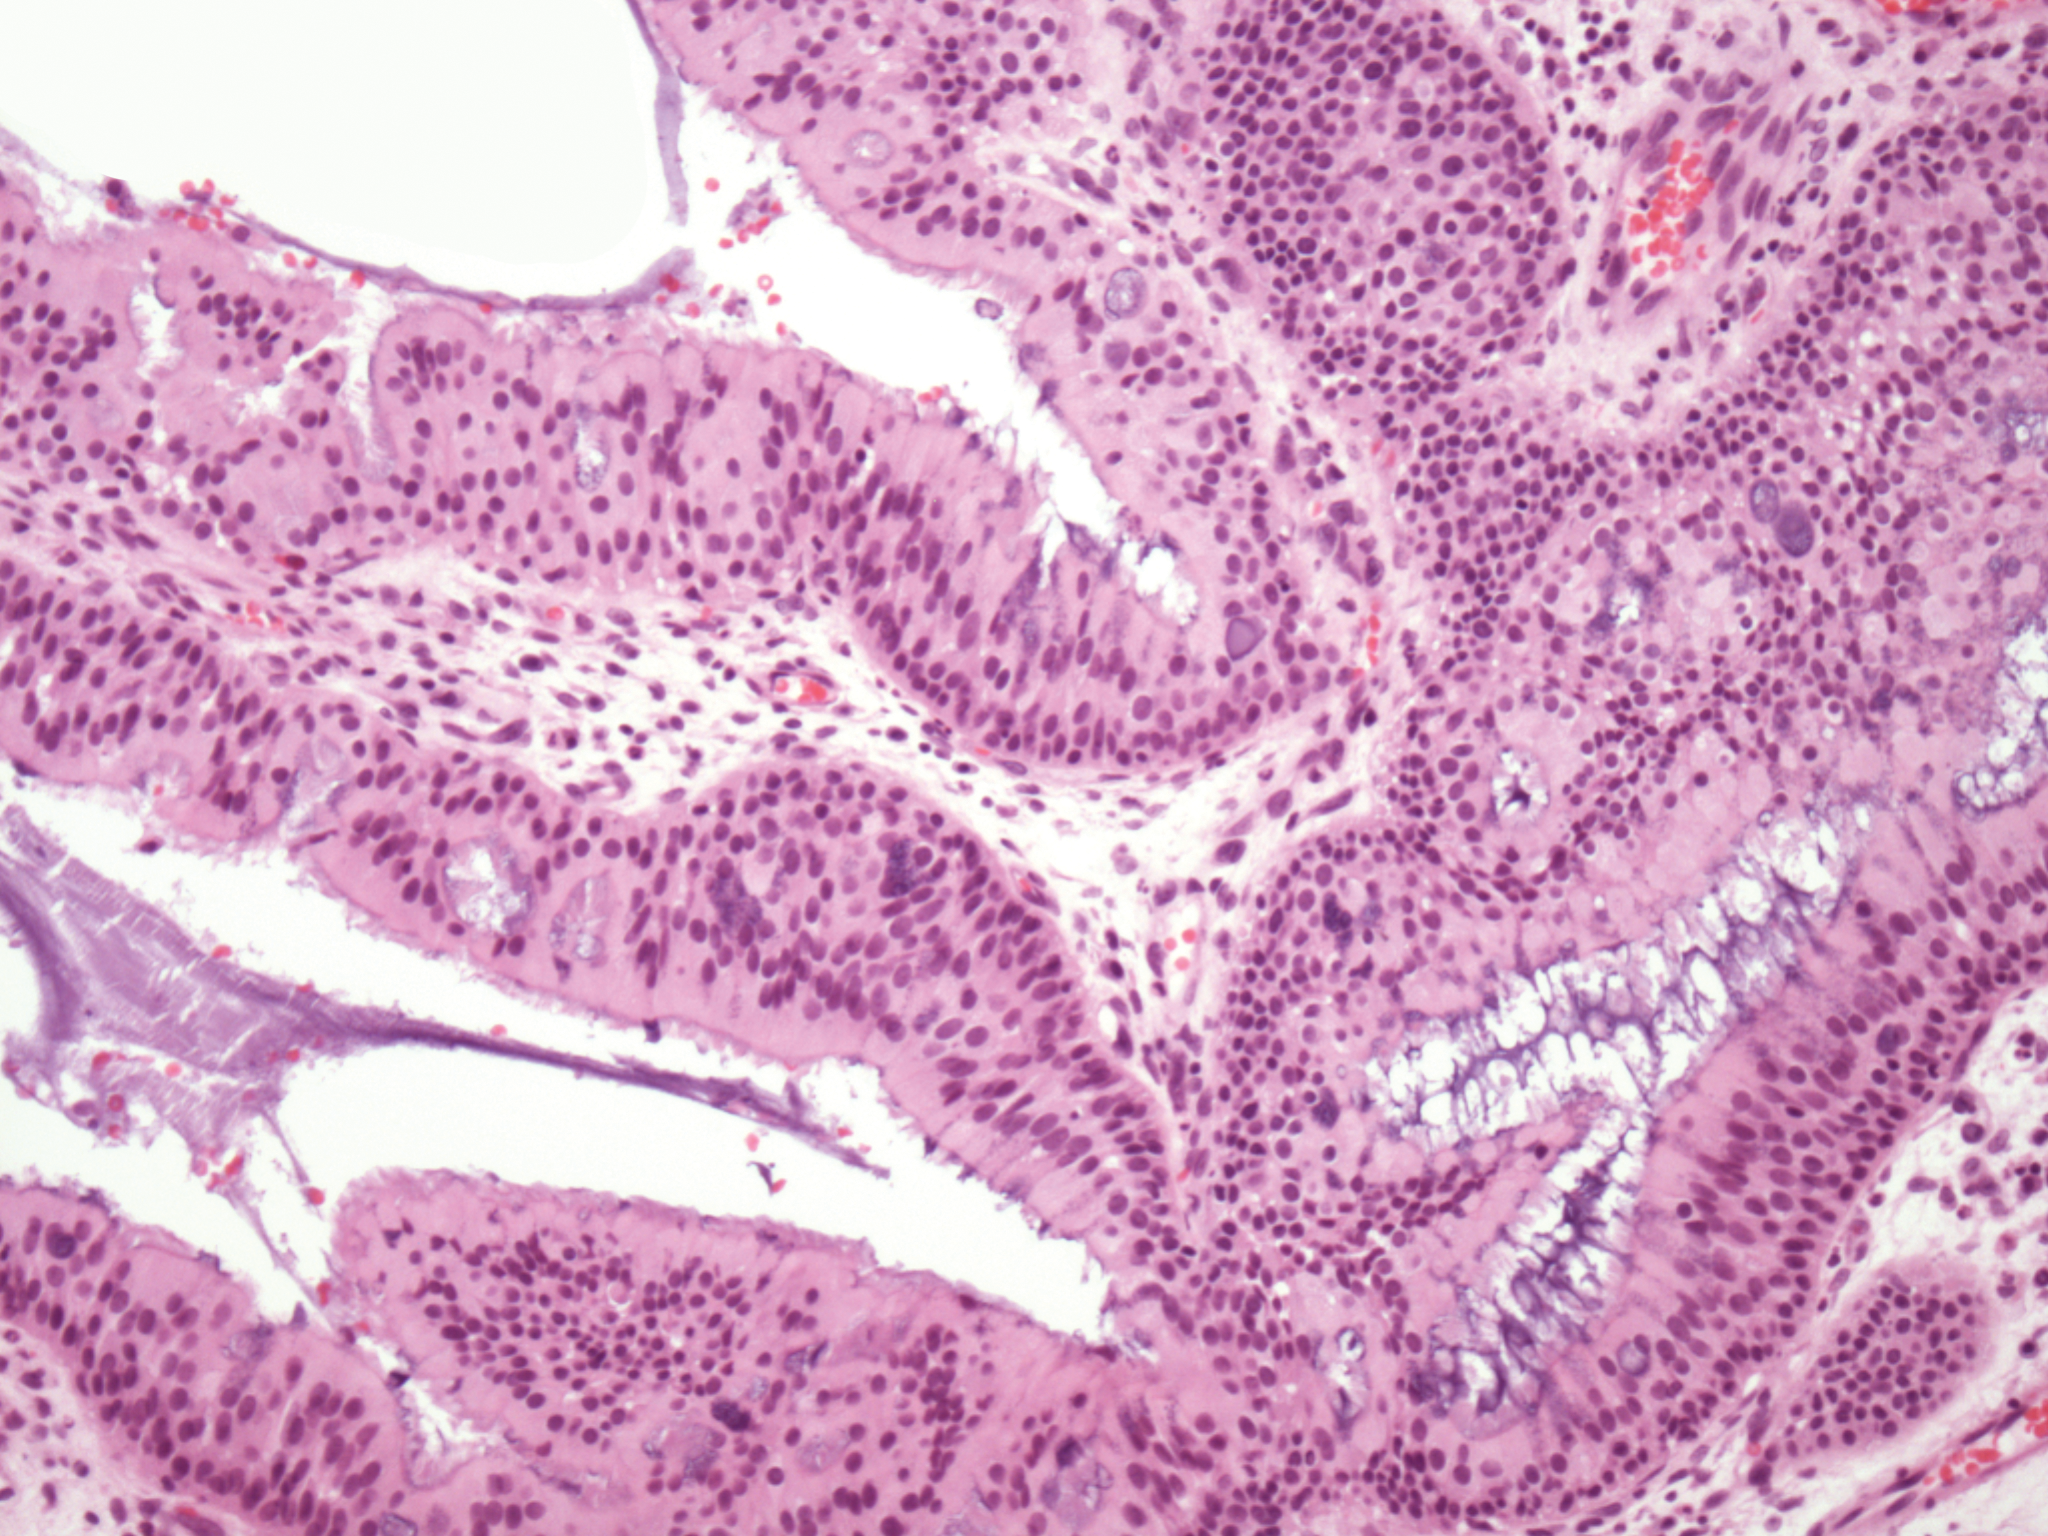 Sinonasal papilloma histopathology Nasal inverted papilloma pathology